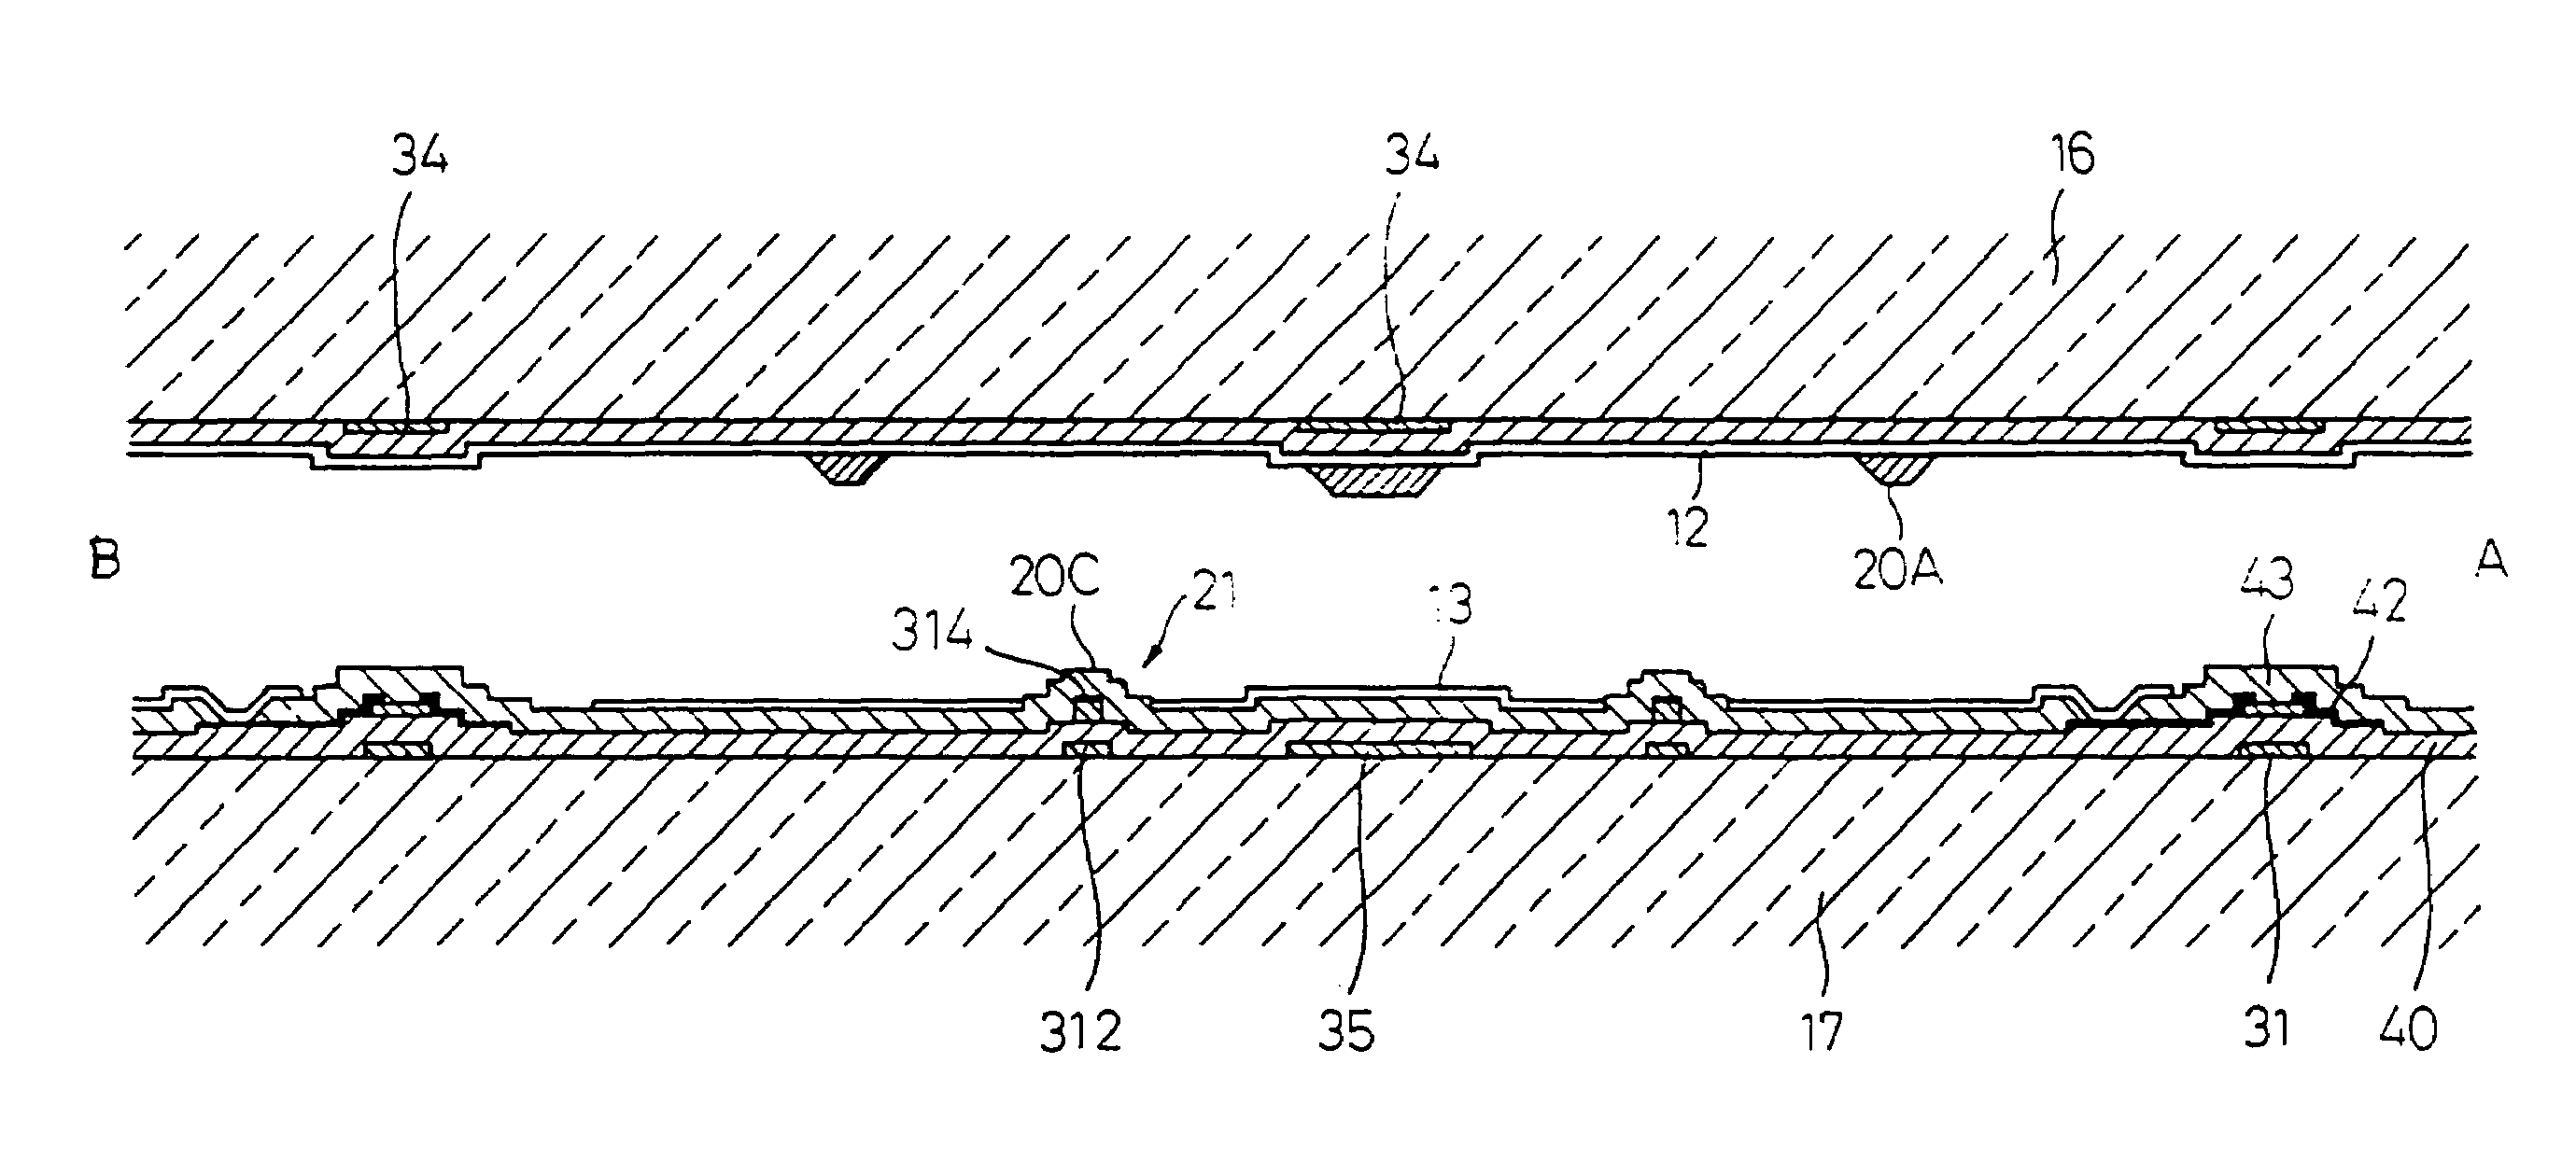 Vertically-aligned (VA) liquid crystal display device